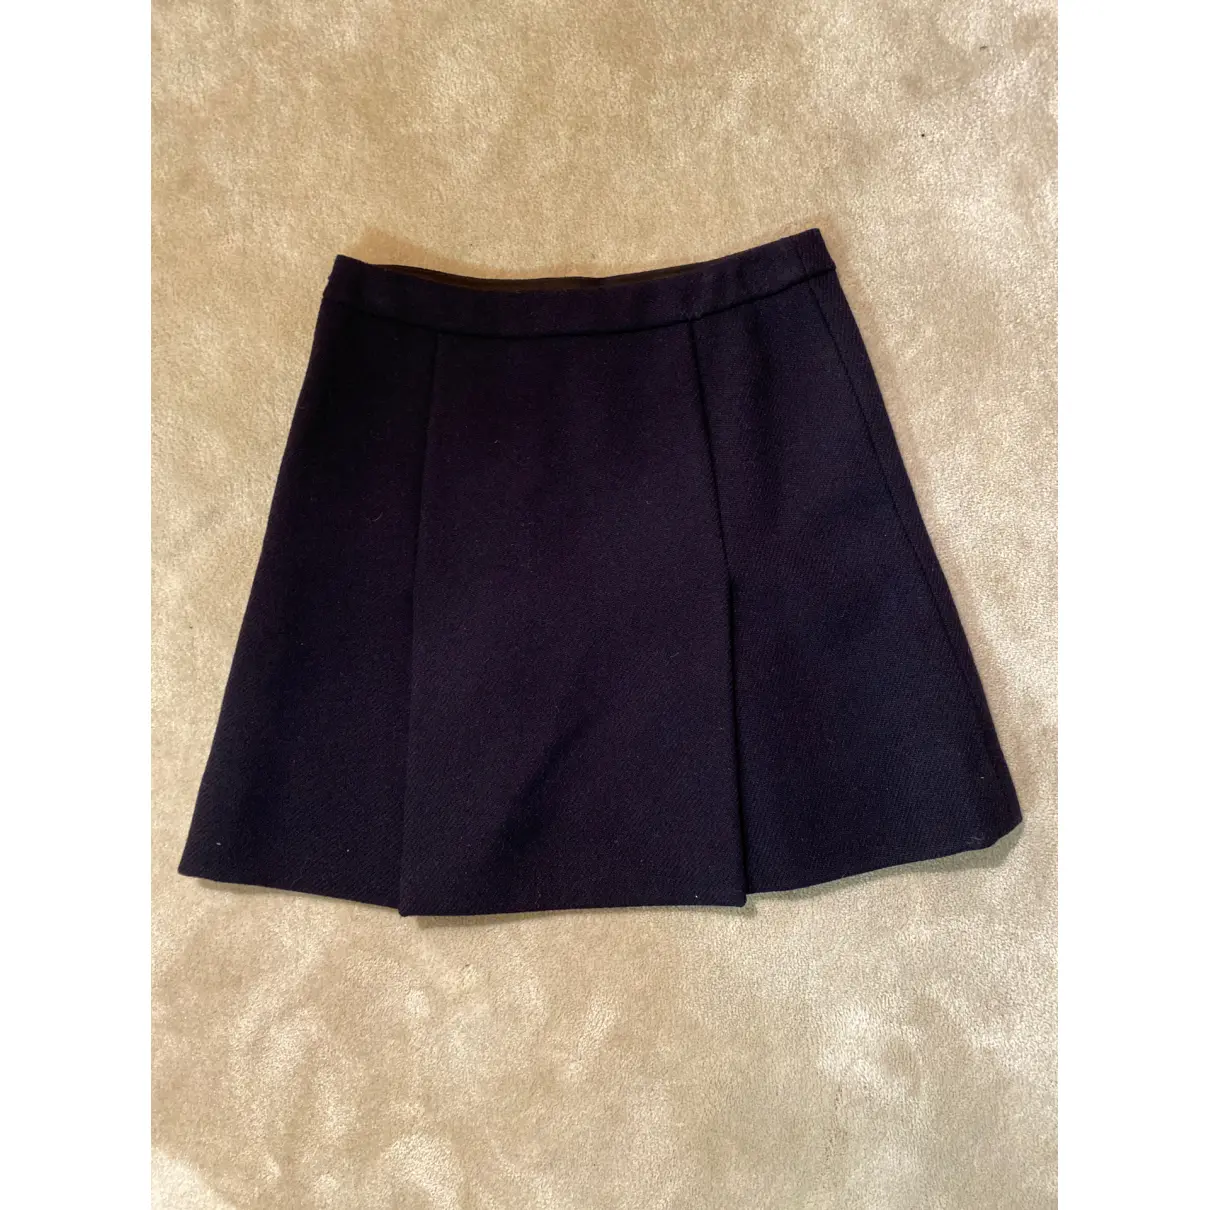 Buy Louis Vuitton Wool mini skirt online